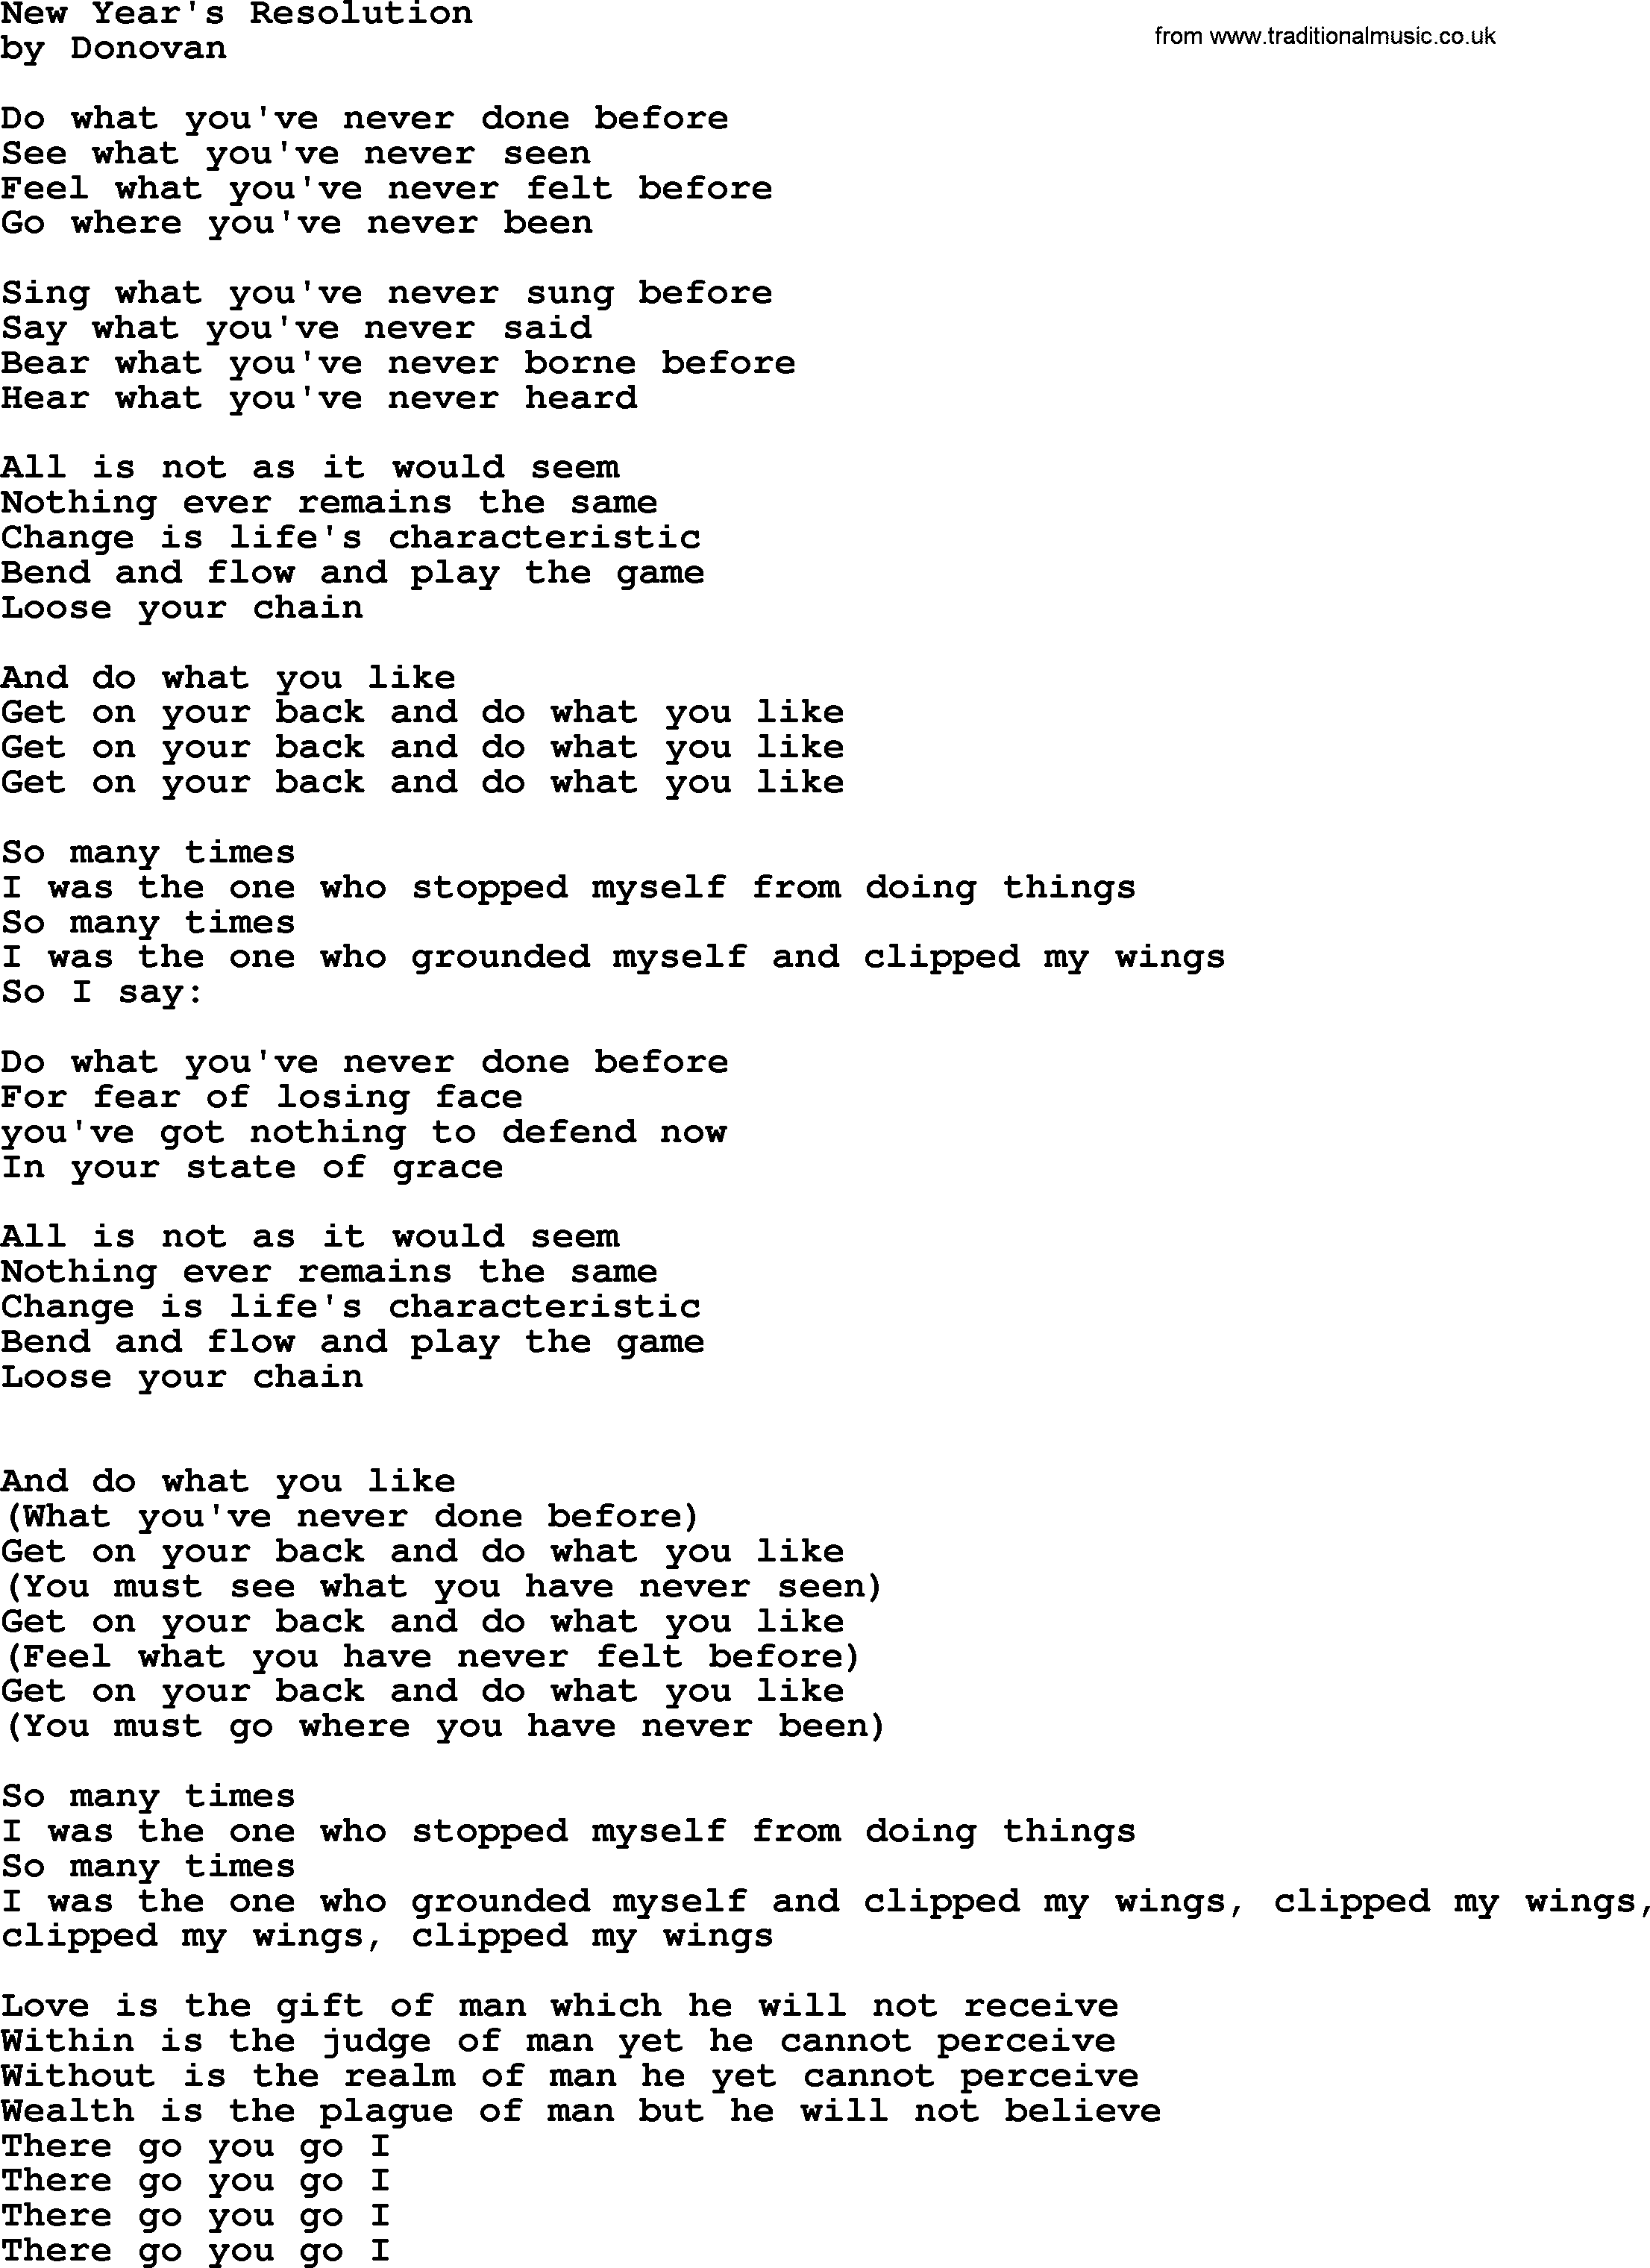 Donovan Leitch song: New Year's Resolution lyrics